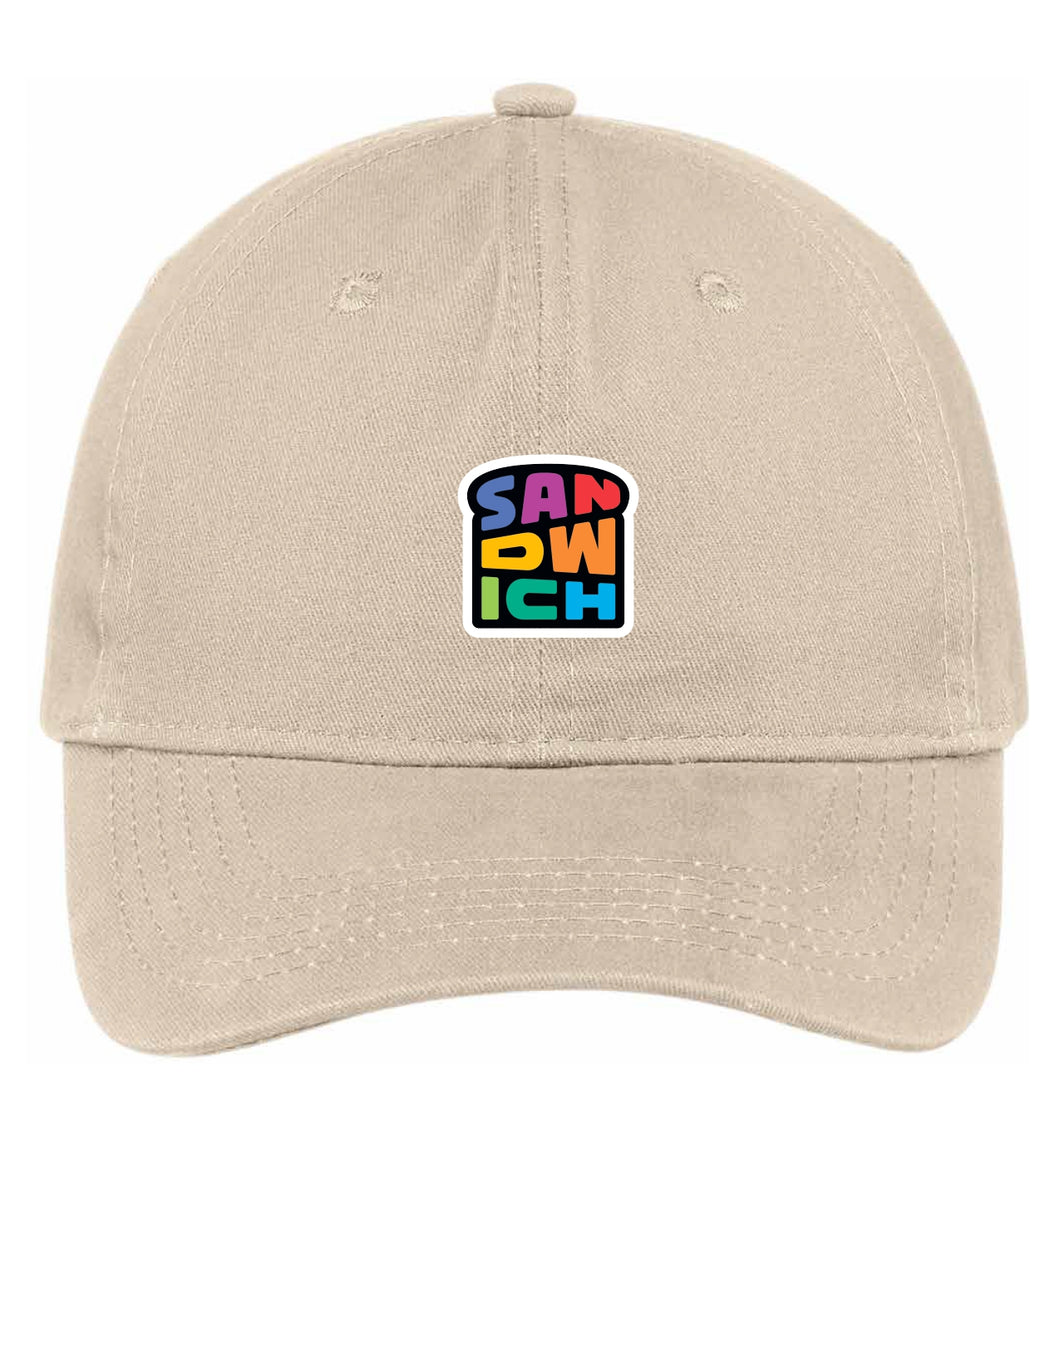 Stone Hat with Rainbow Logo